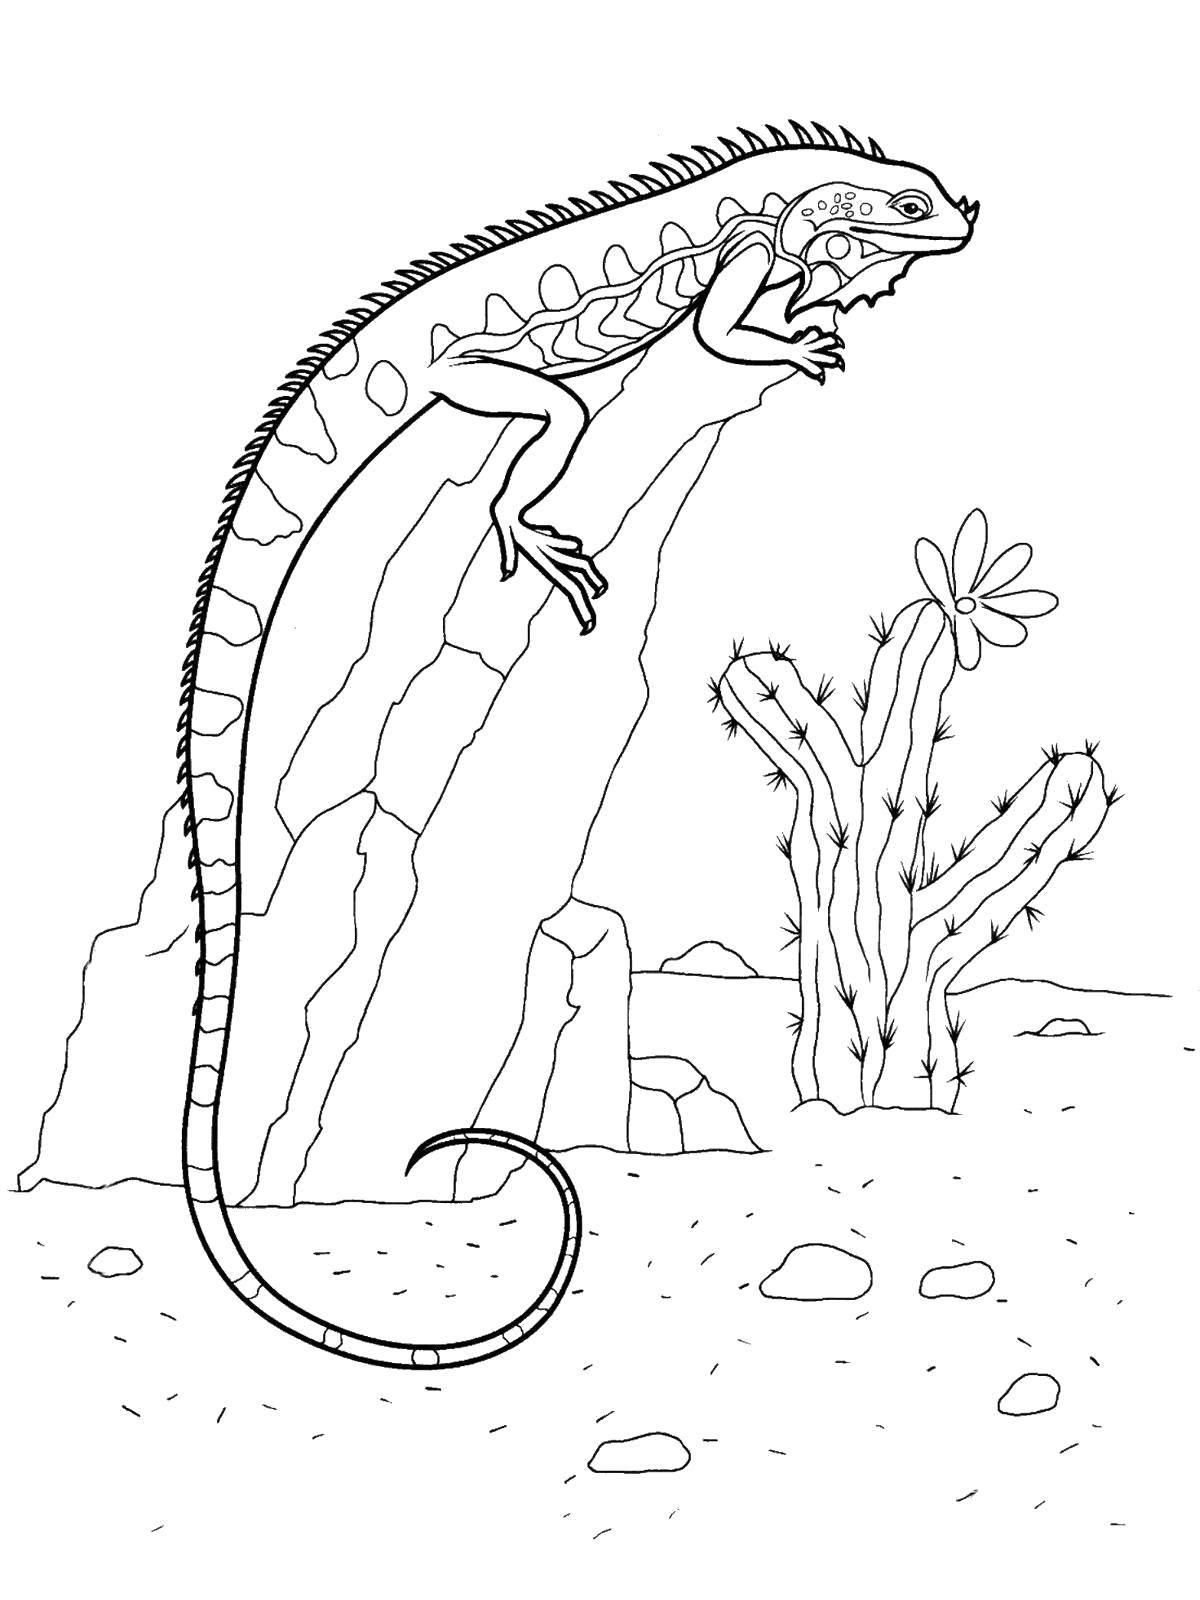 Coloring Iguana. Category reptiles. Tags:  Reptile, iguana.